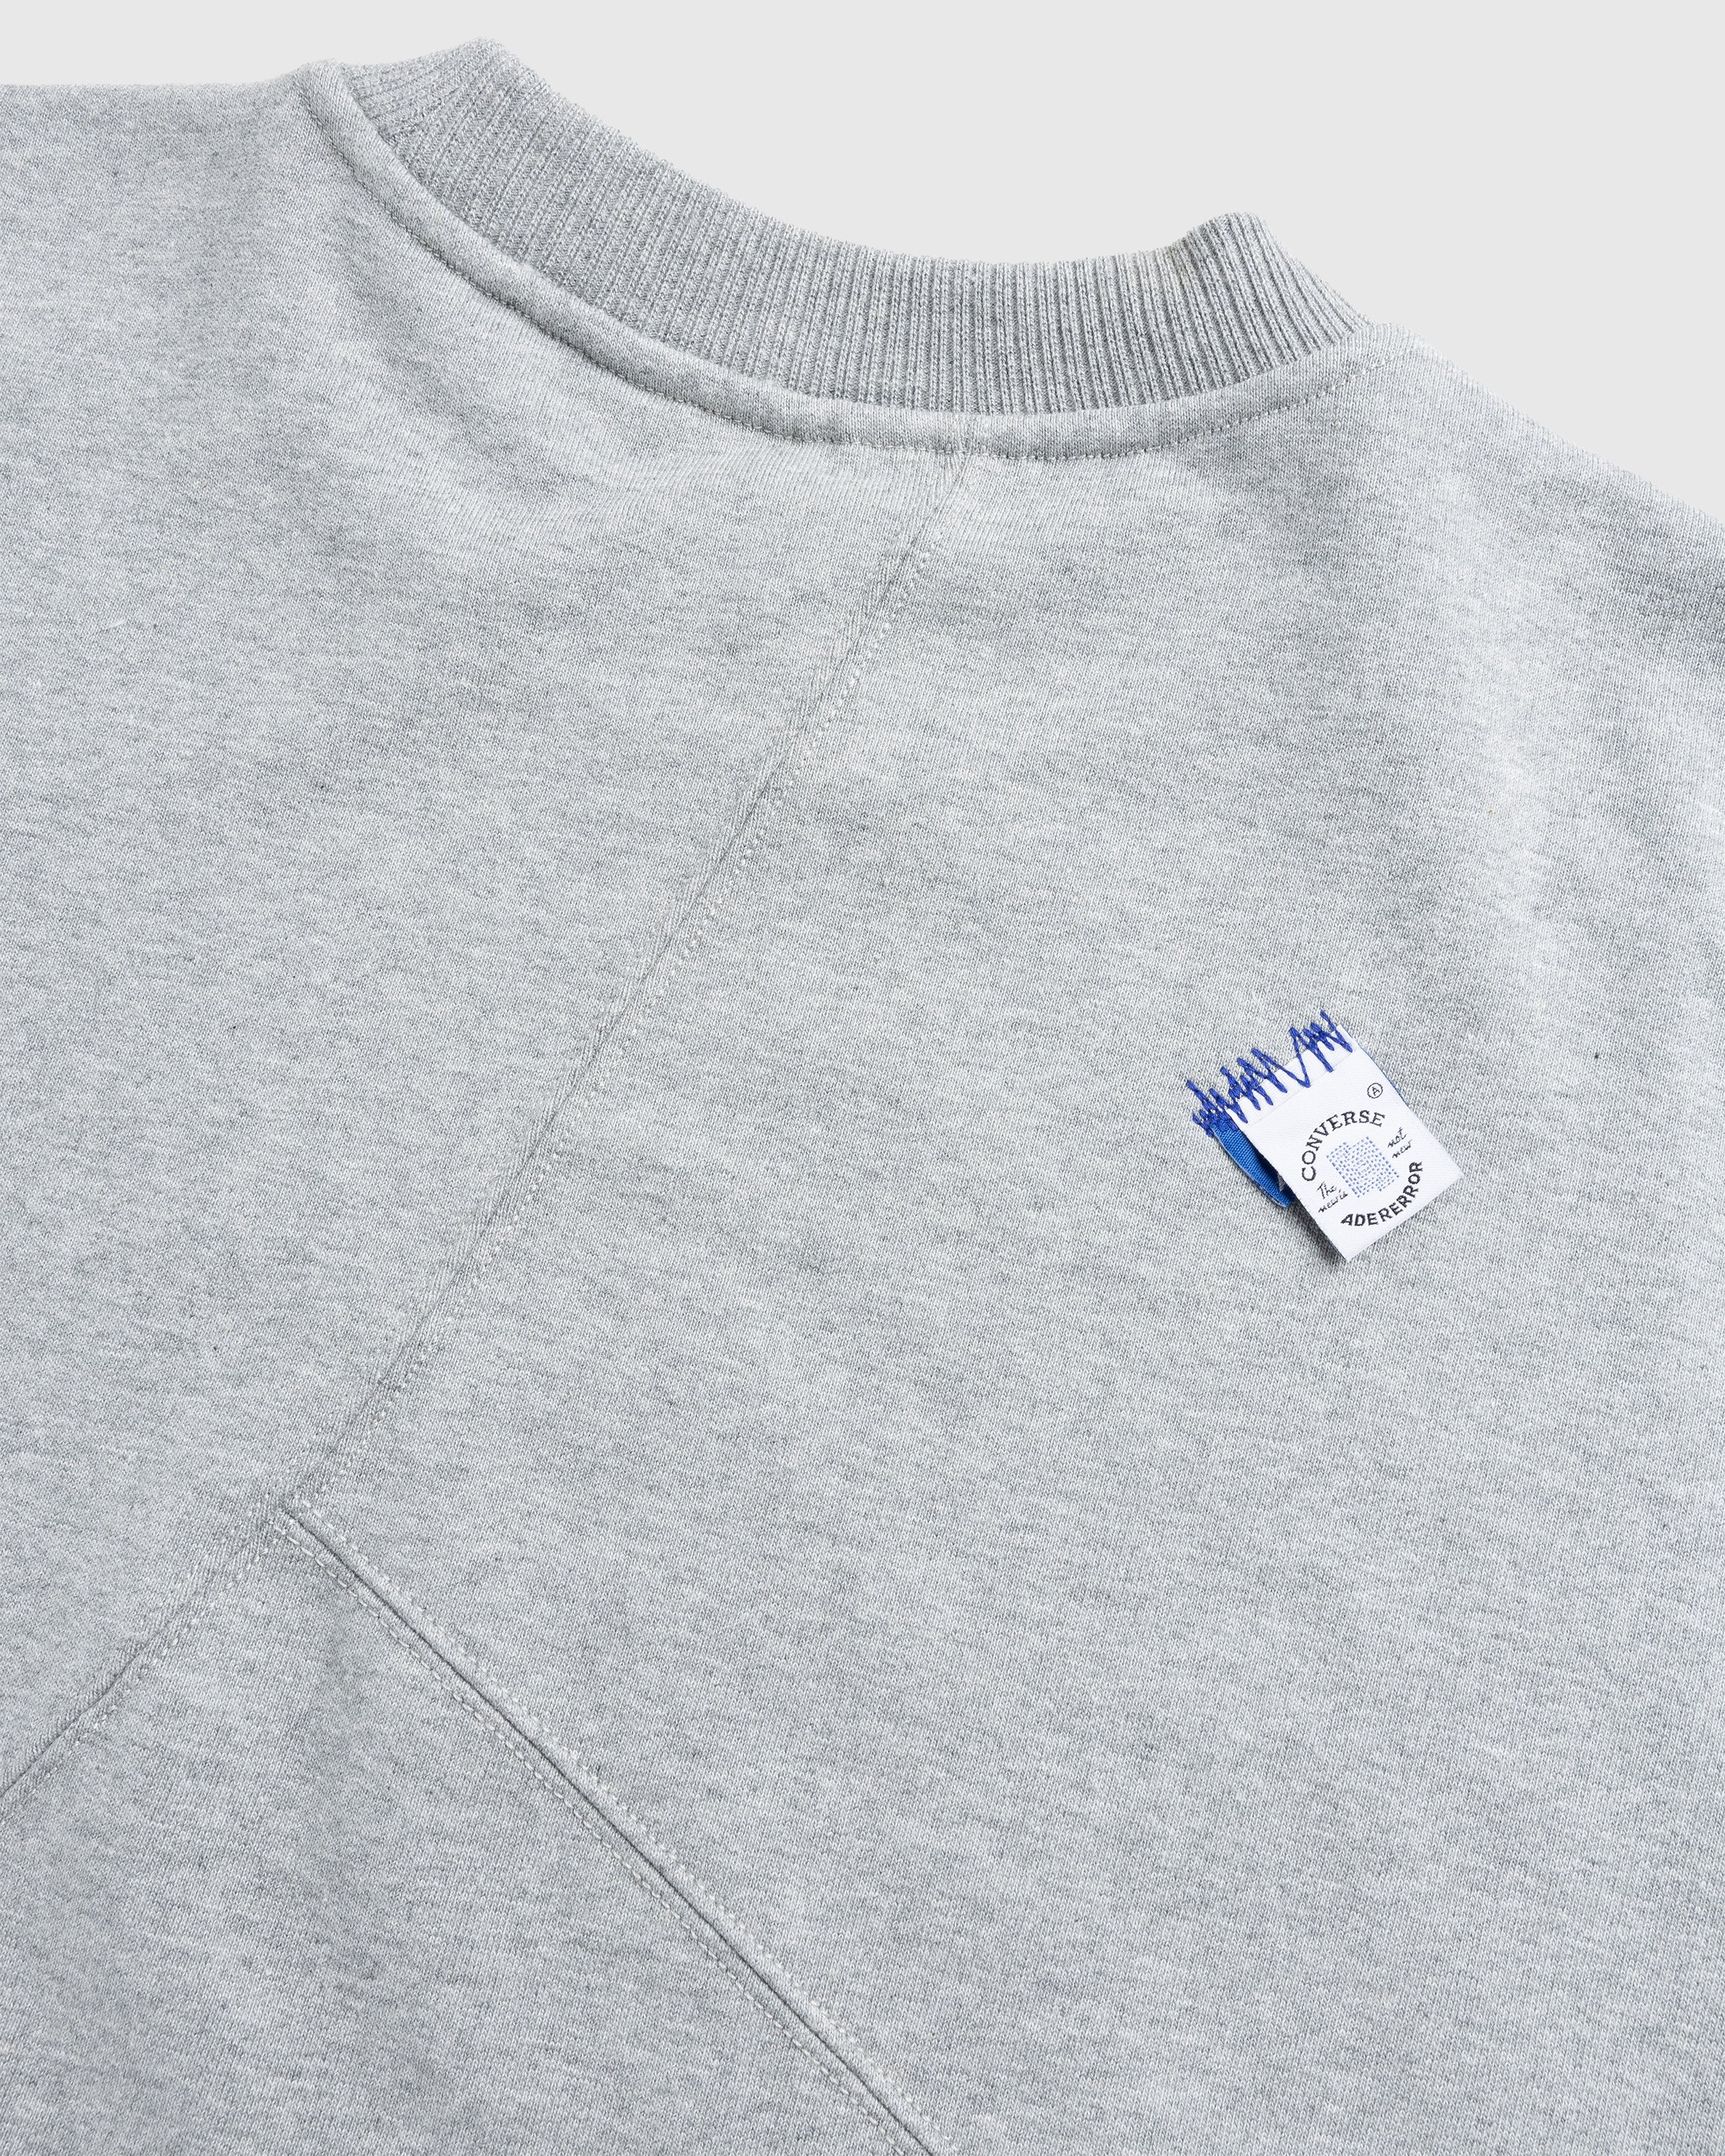 Converse x Ader Error - Shapes Crew Sweatshirt Vintage Grey Heather - Clothing - Grey - Image 6